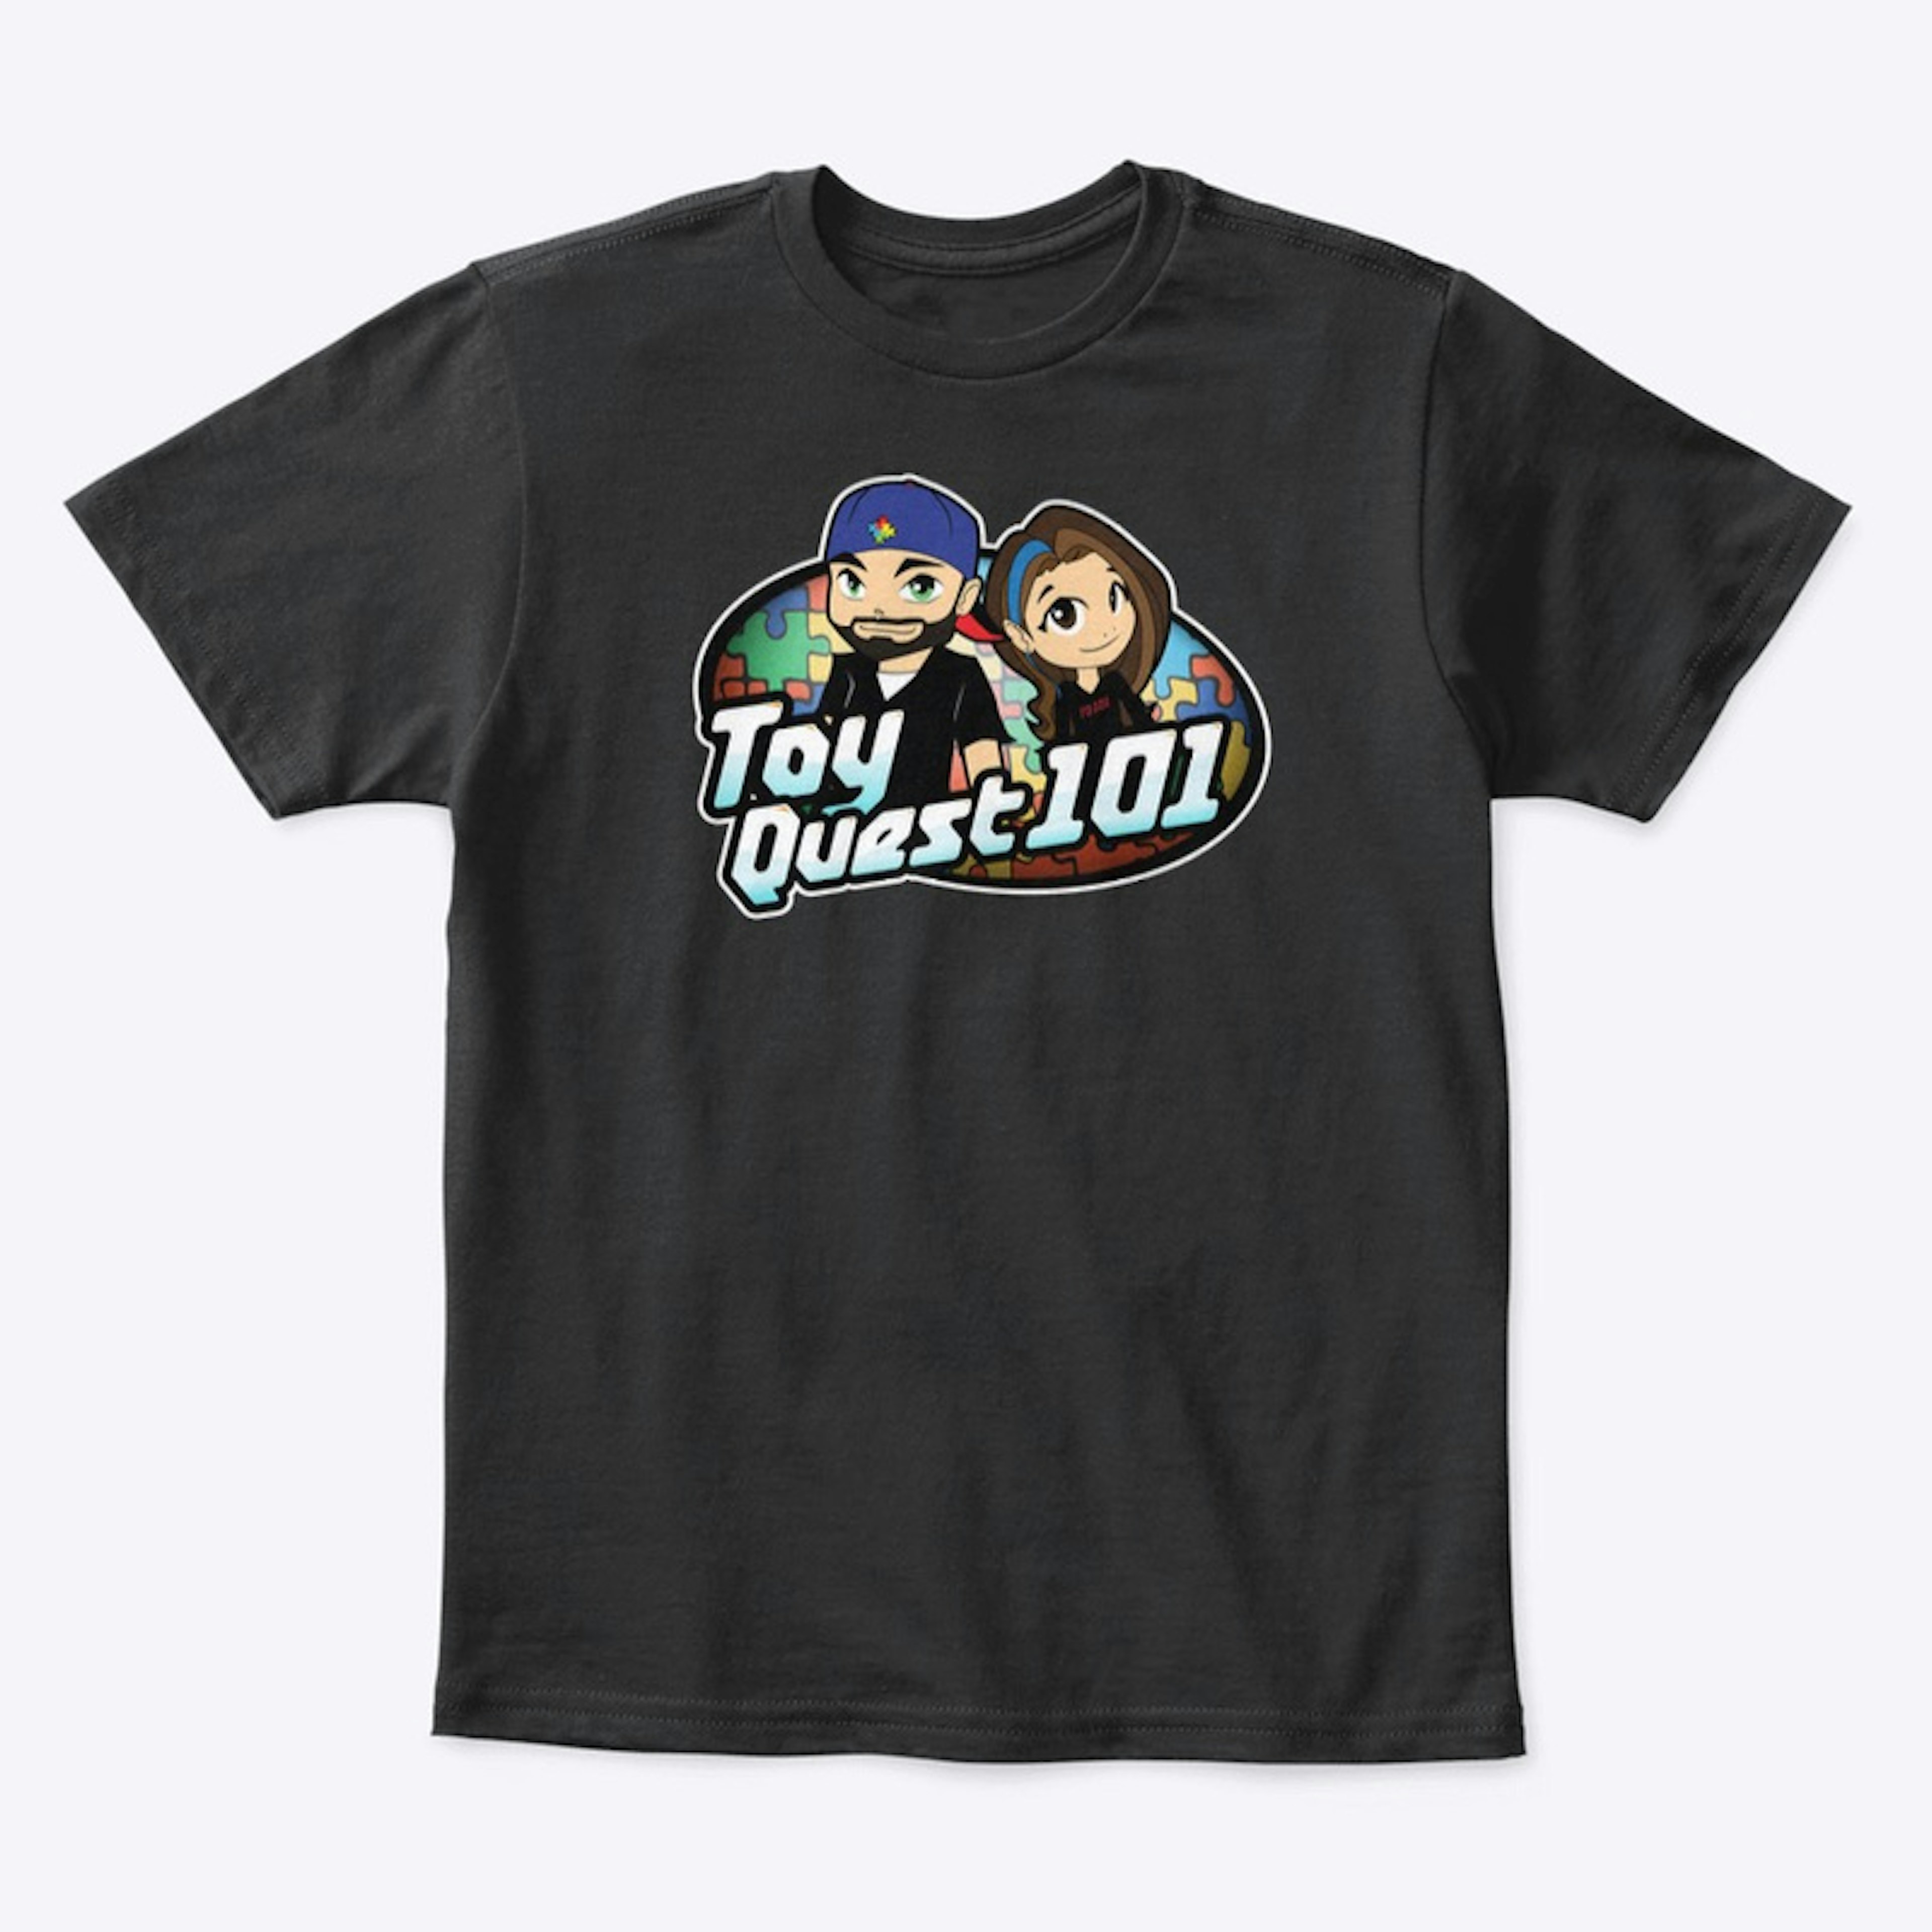 Toyquest101 BLK Kids T-Shirt